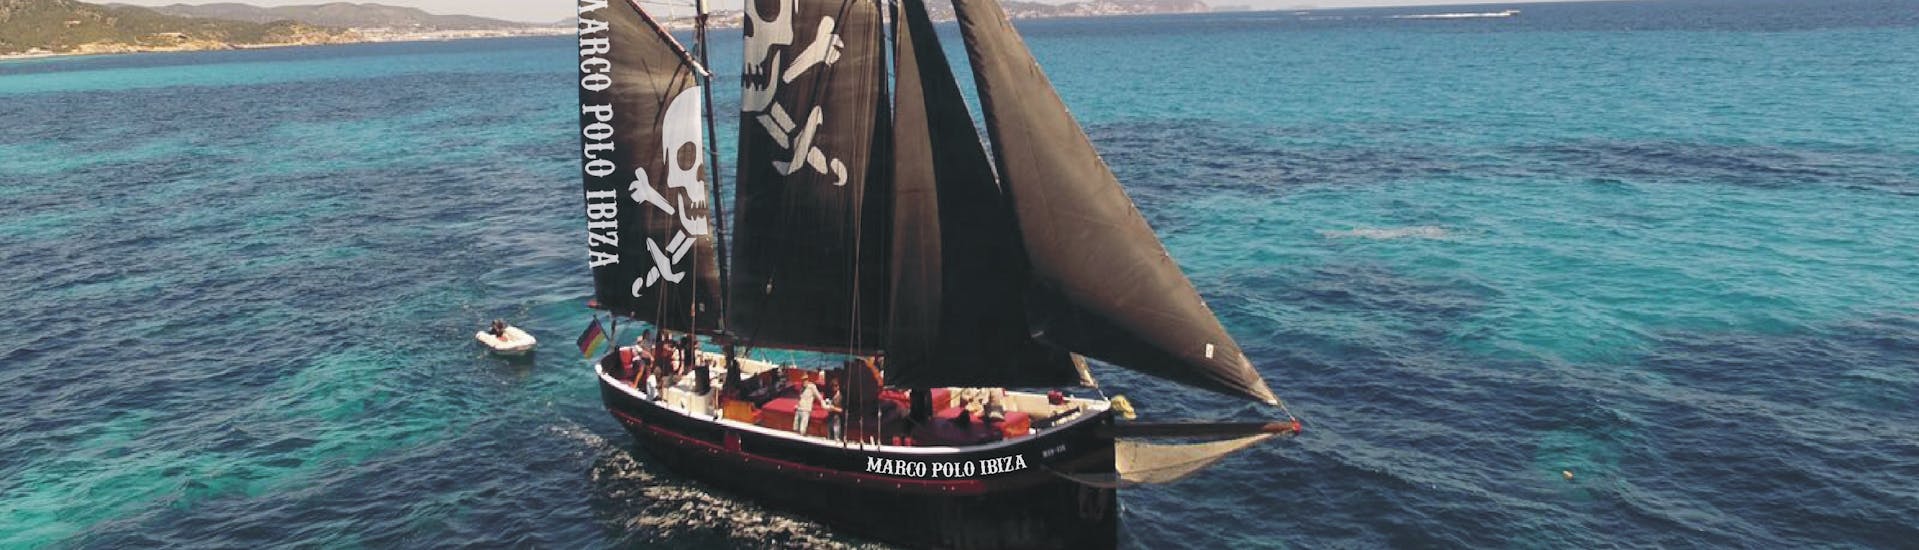 Notre bateau pirate est au milieu de la mer lors de la Balade en bateau pirate à Formentera depuis Ibiza avec Apéritif & Snorkeling avec Marco Polo Ibiza.